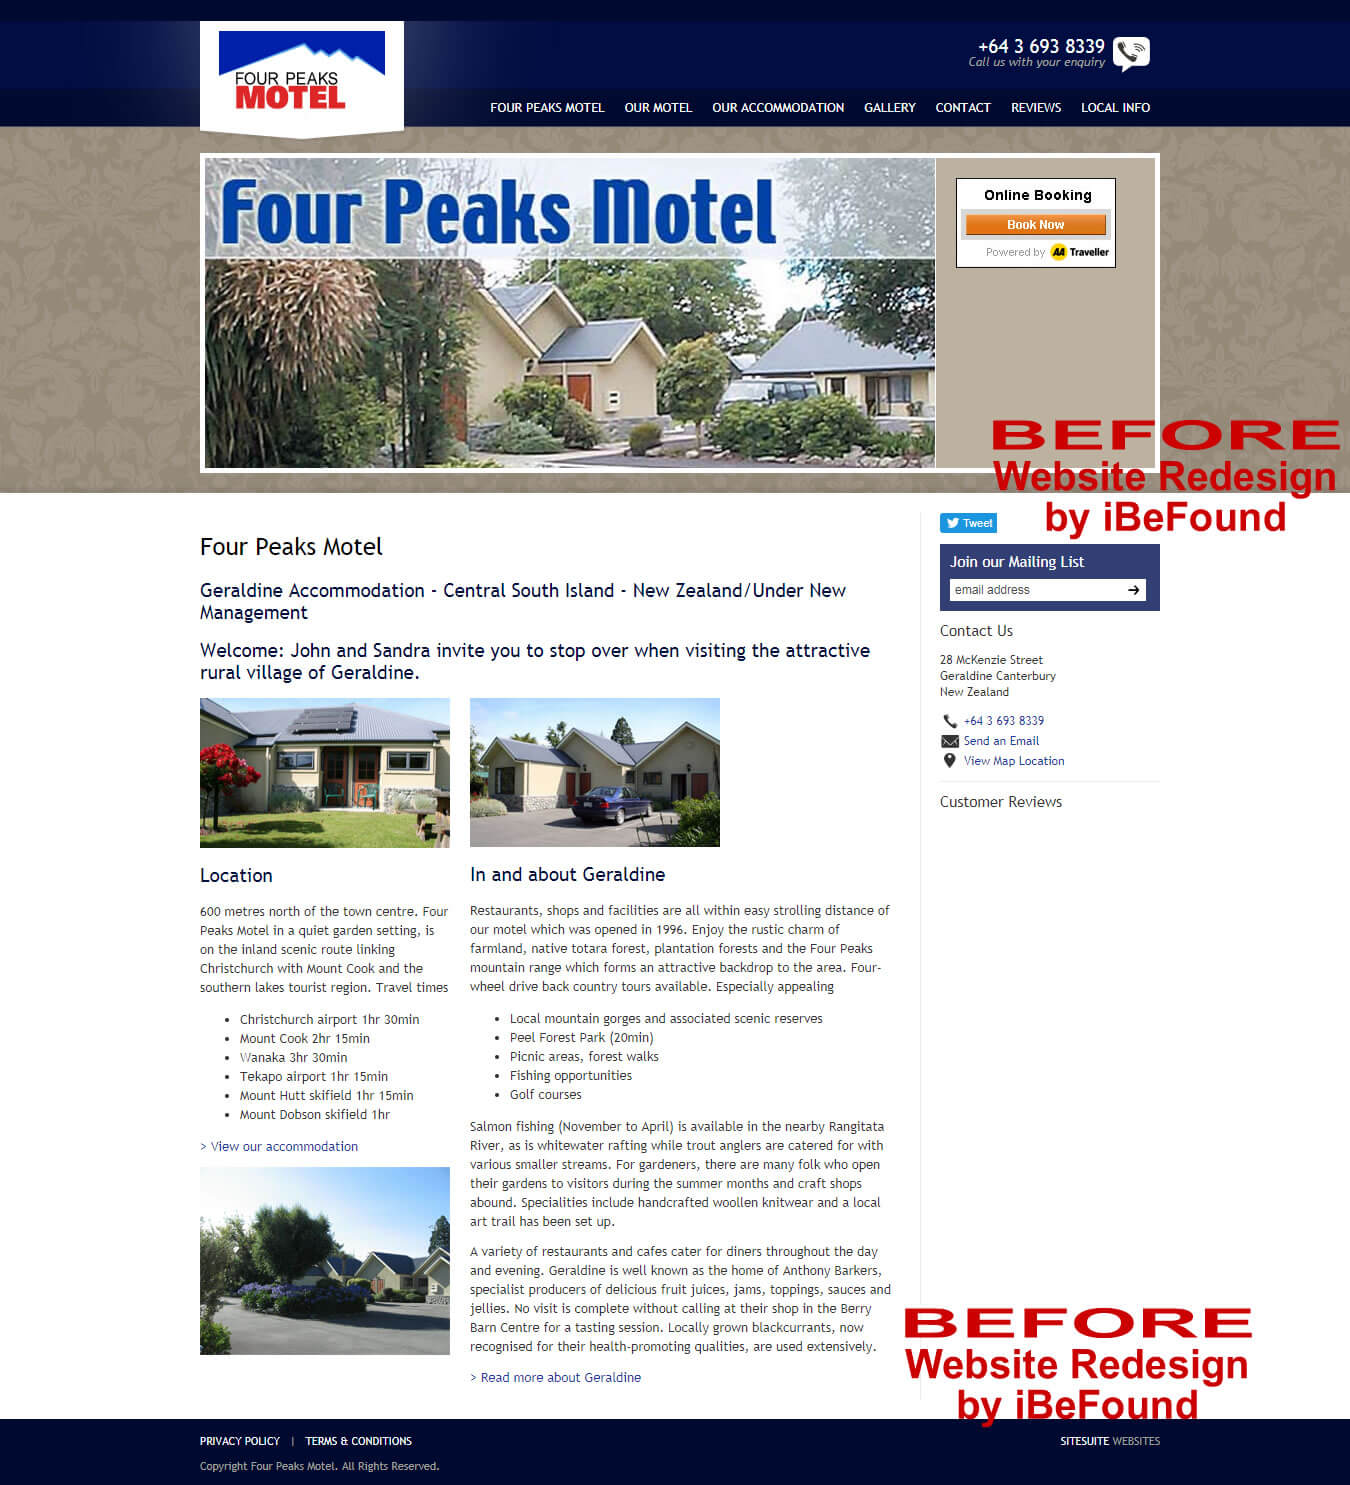 Homepage Of Four Peaks Motel Before Website Redesign By iBeFound Digital Marketing